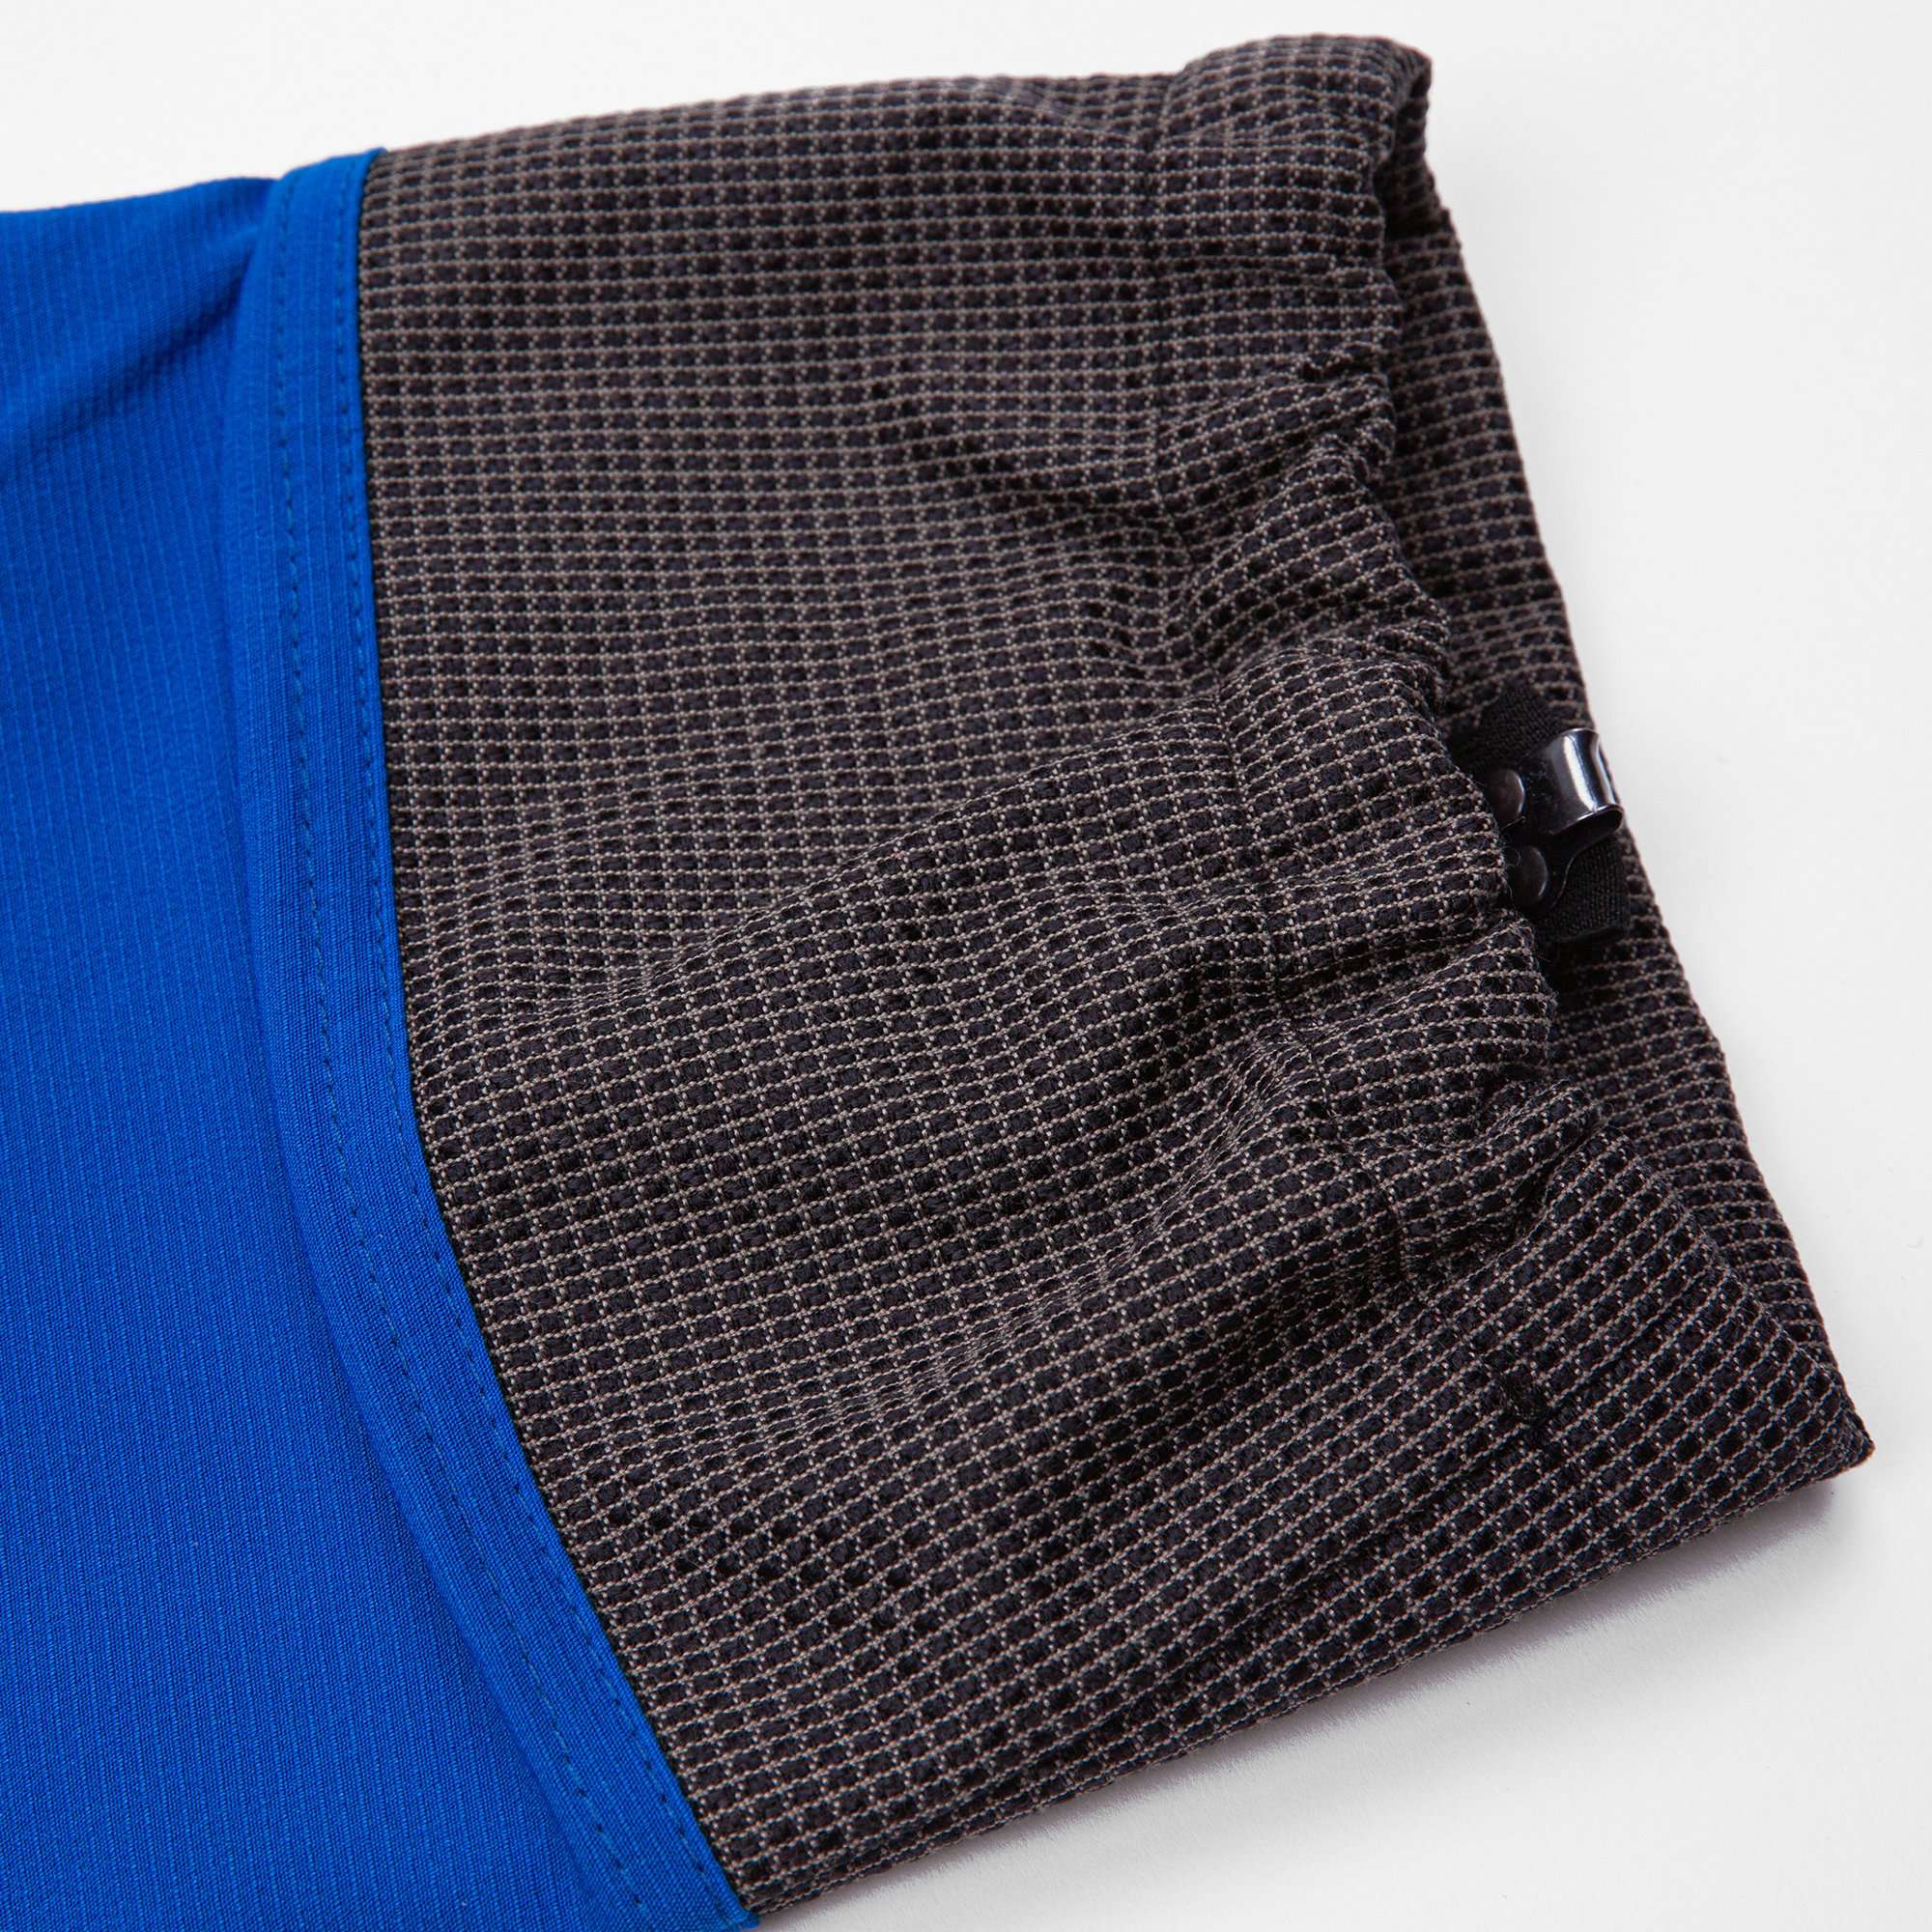 AT4160 Breatheflex Pro Non-Protective Trousers - Blue - Arbortec Forestwear